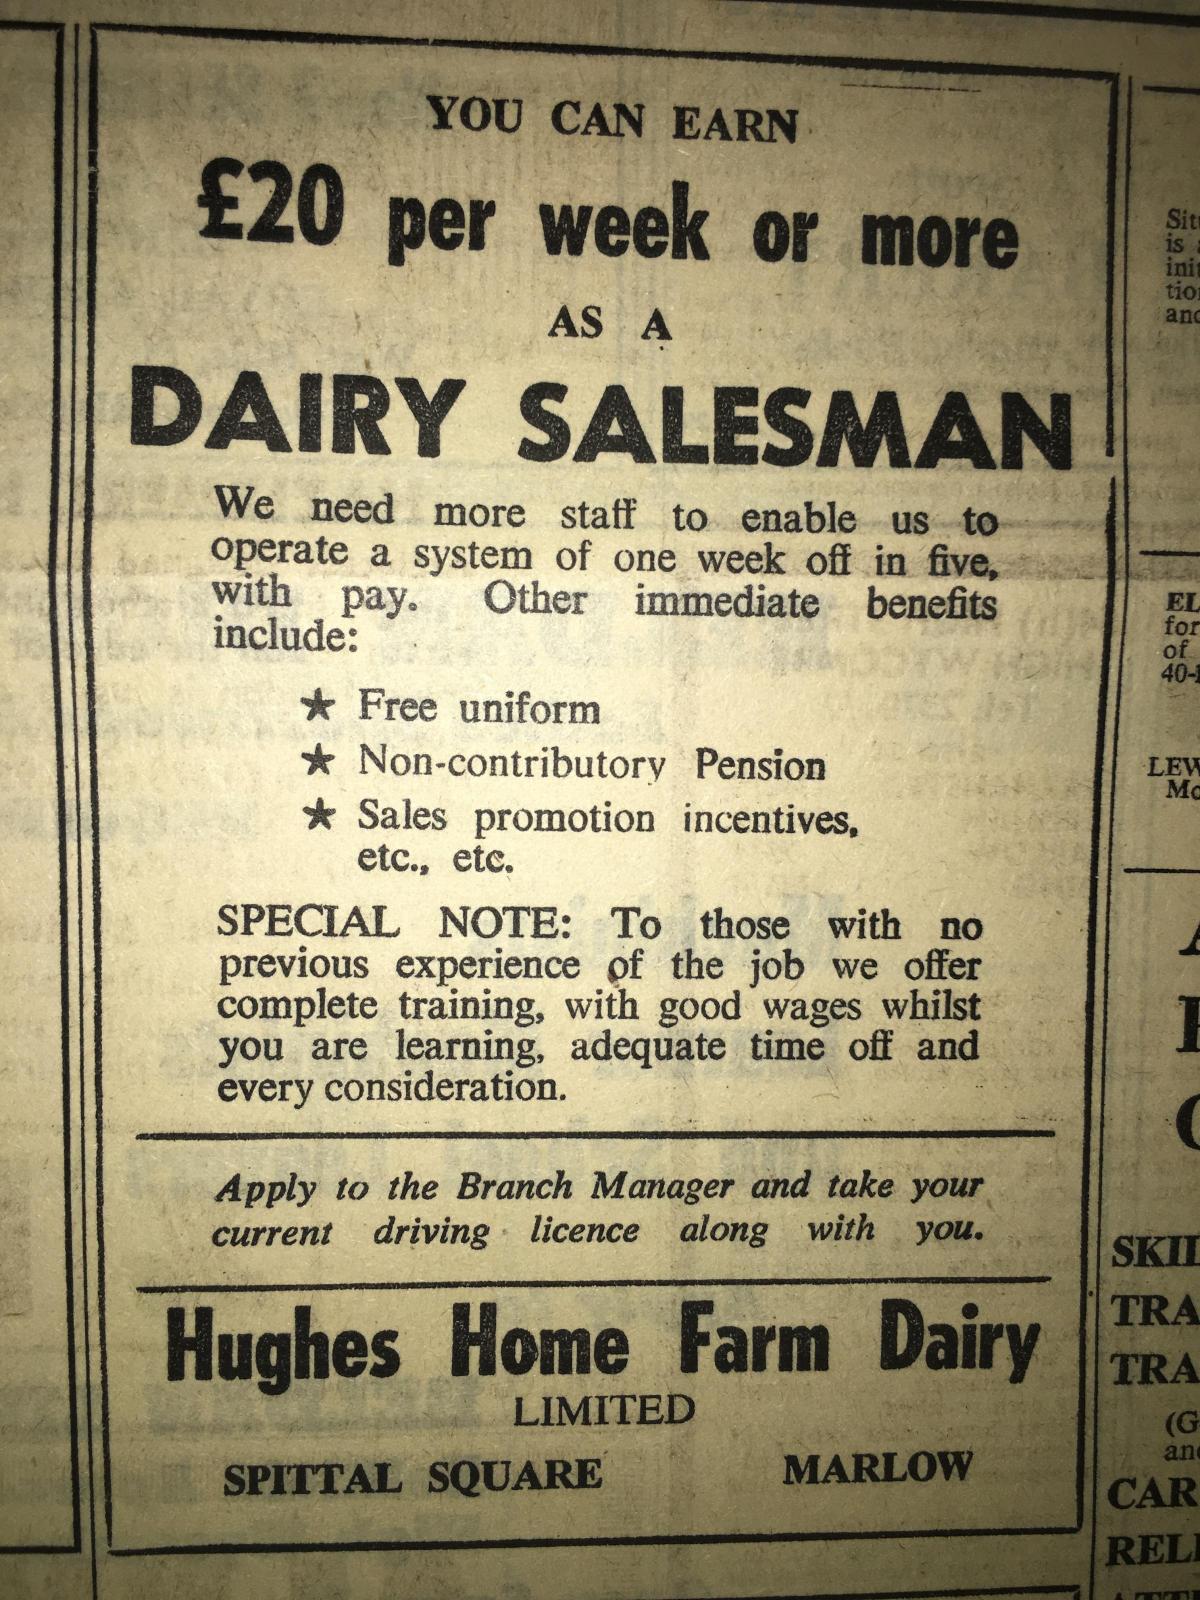 Job offer: Earn £20 or more a week as a dairy salesman